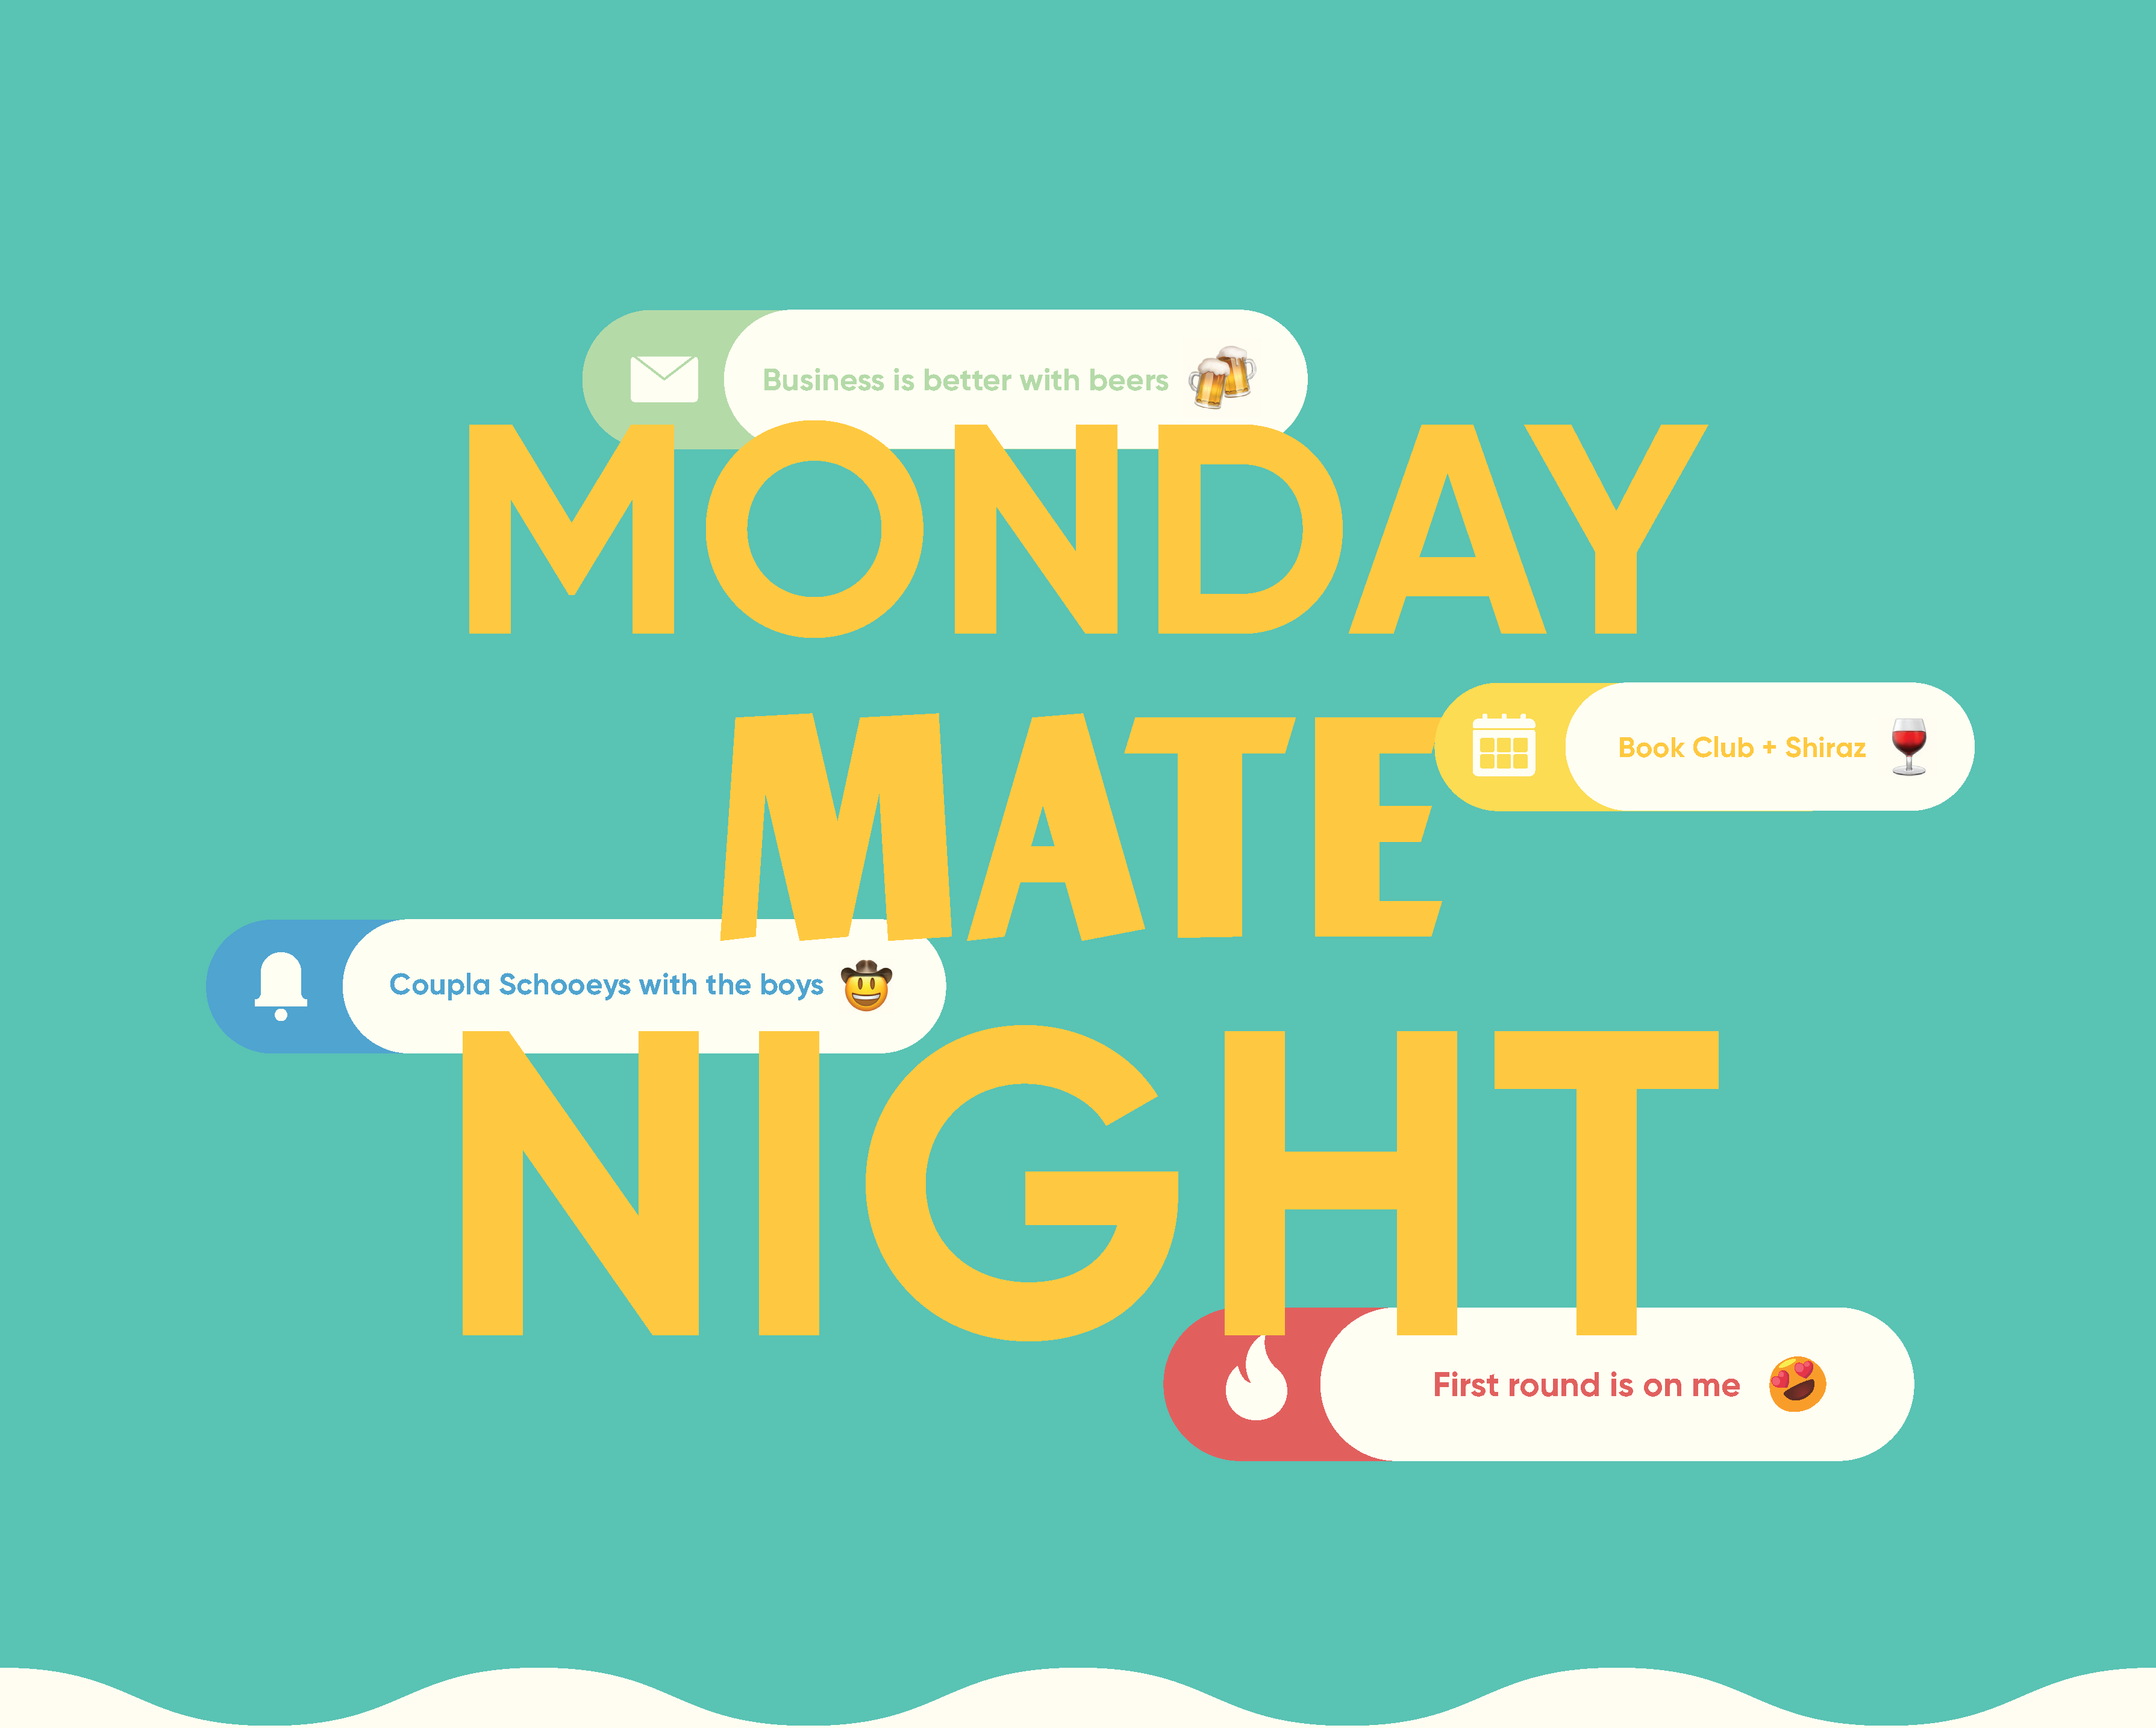 Monday Mates Night